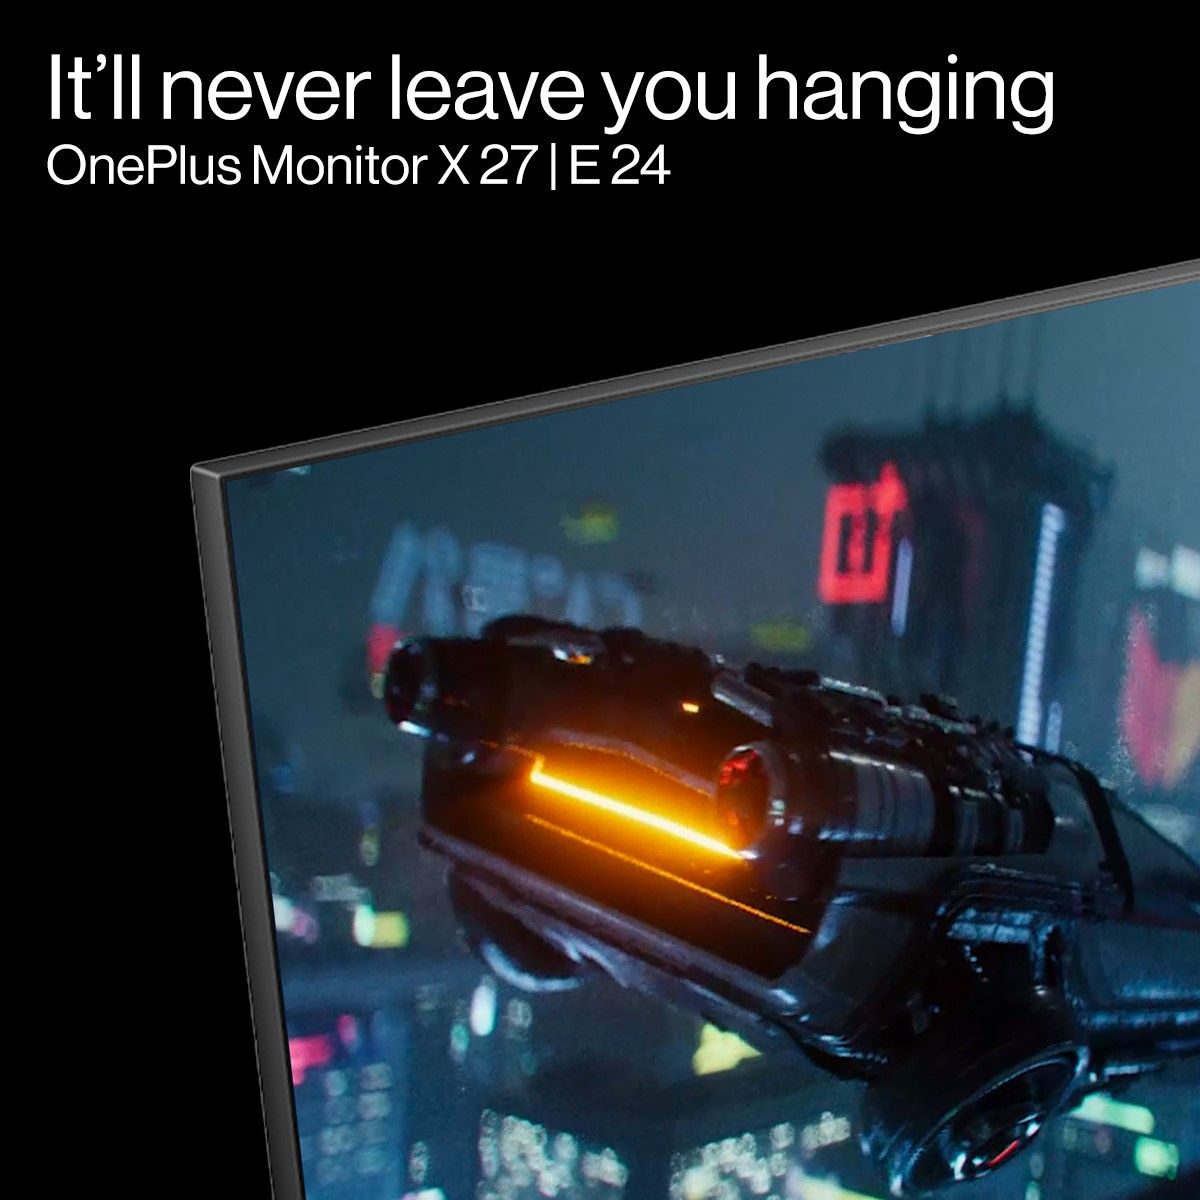 OnePlus เตรียมเปิดตัวจอมอนิเตอร์ พร้อมจับมือ Keychron ส่ง Mechanical Keyboard ลงตลาด PC เร็ว ๆ นี้